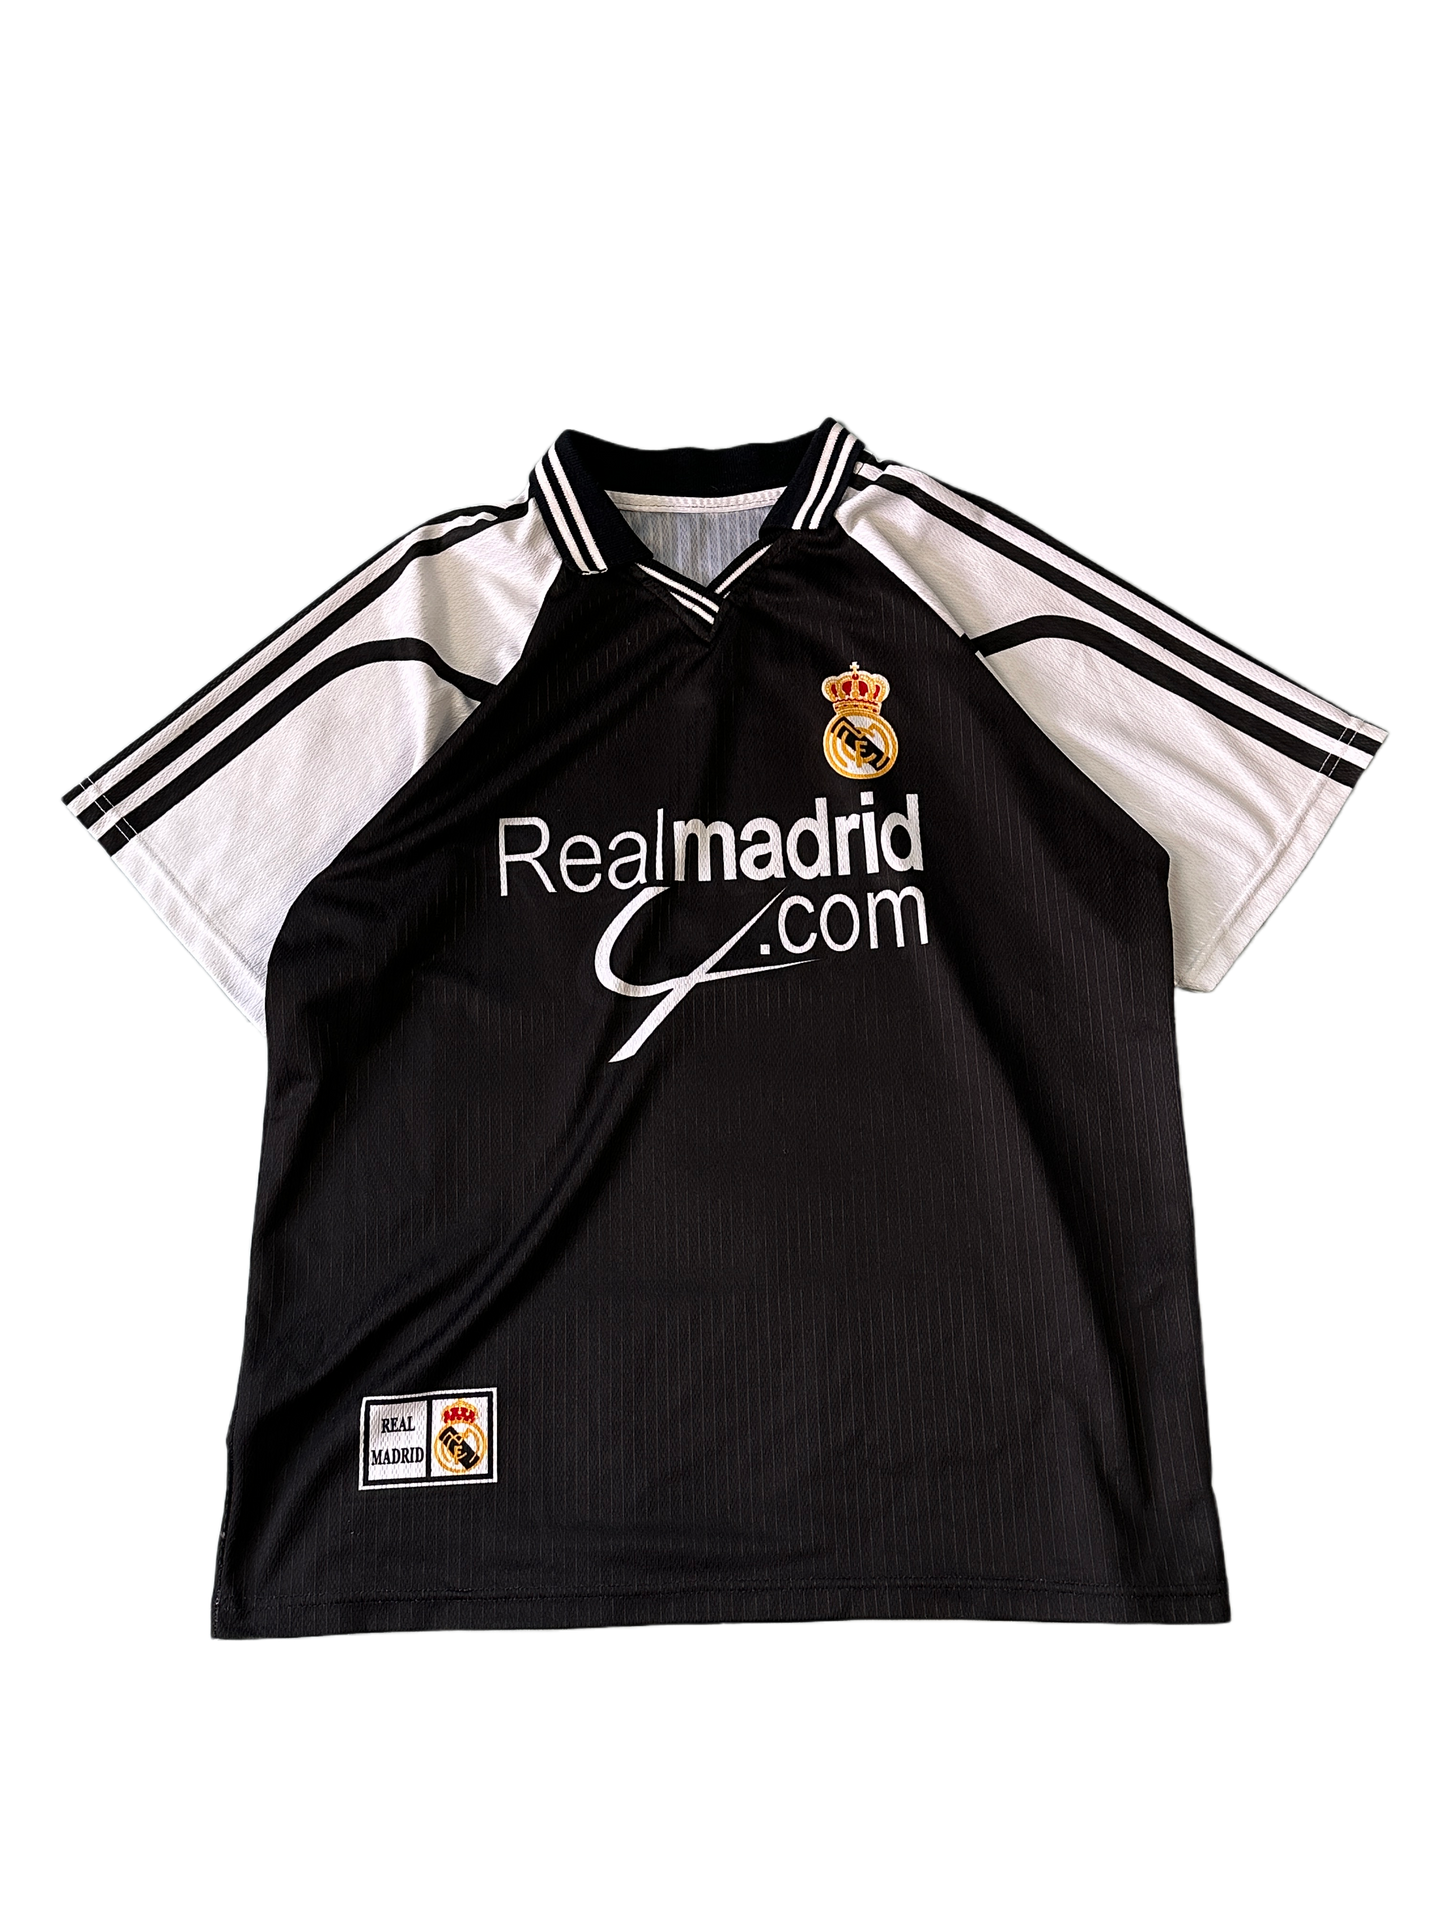 Real Madrid 2001 Vintage Jersey - XL